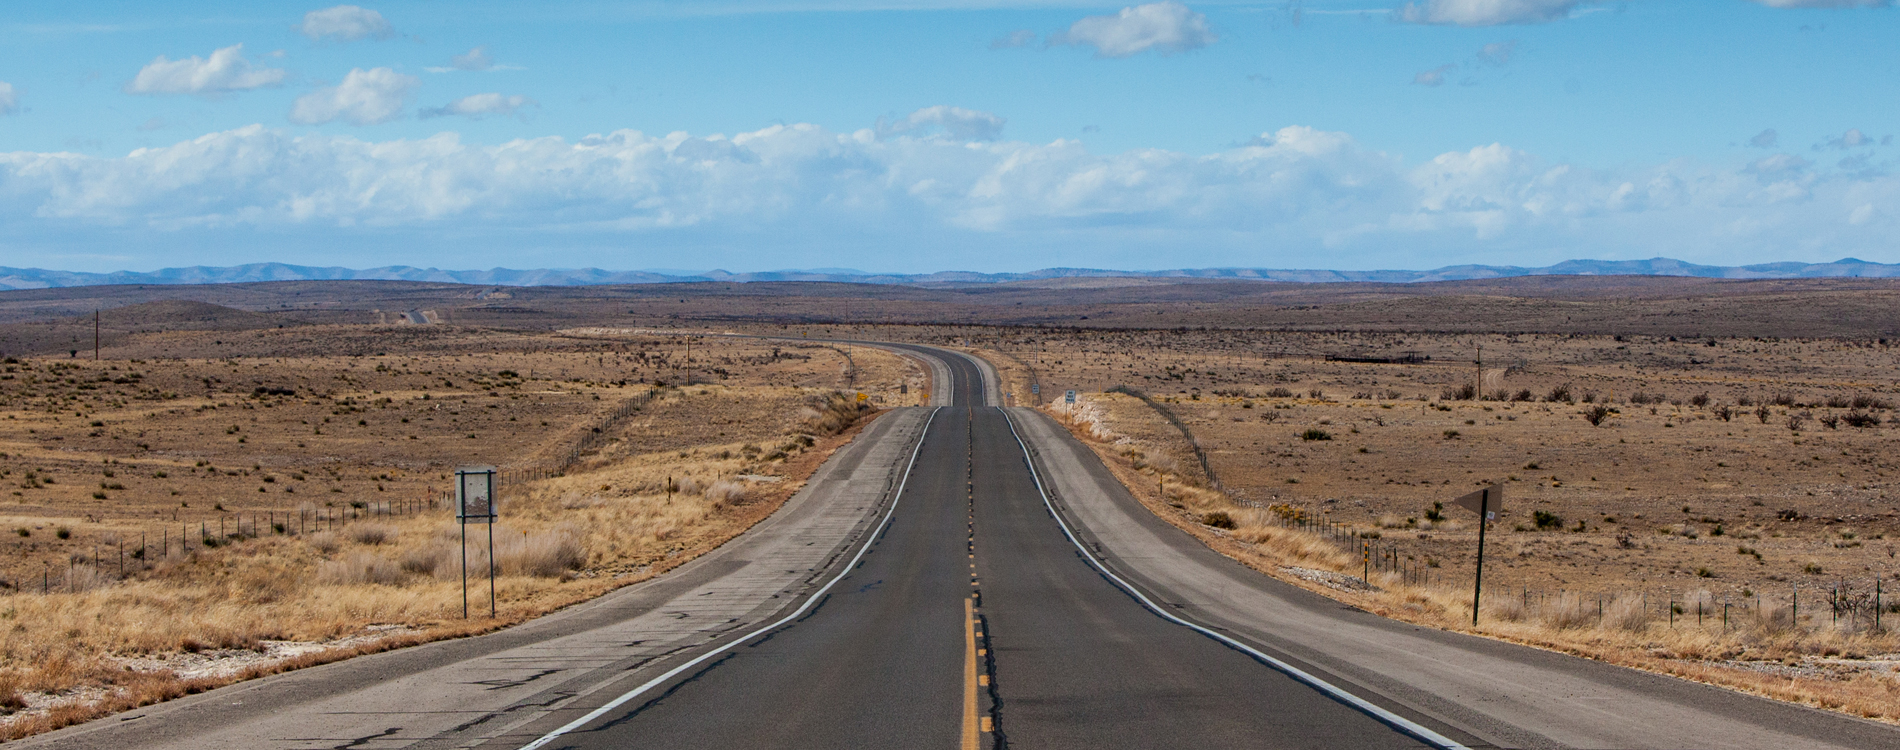 Ruidoso, NM - Deserted Highway 82 Between Artesia and Cloudcroft